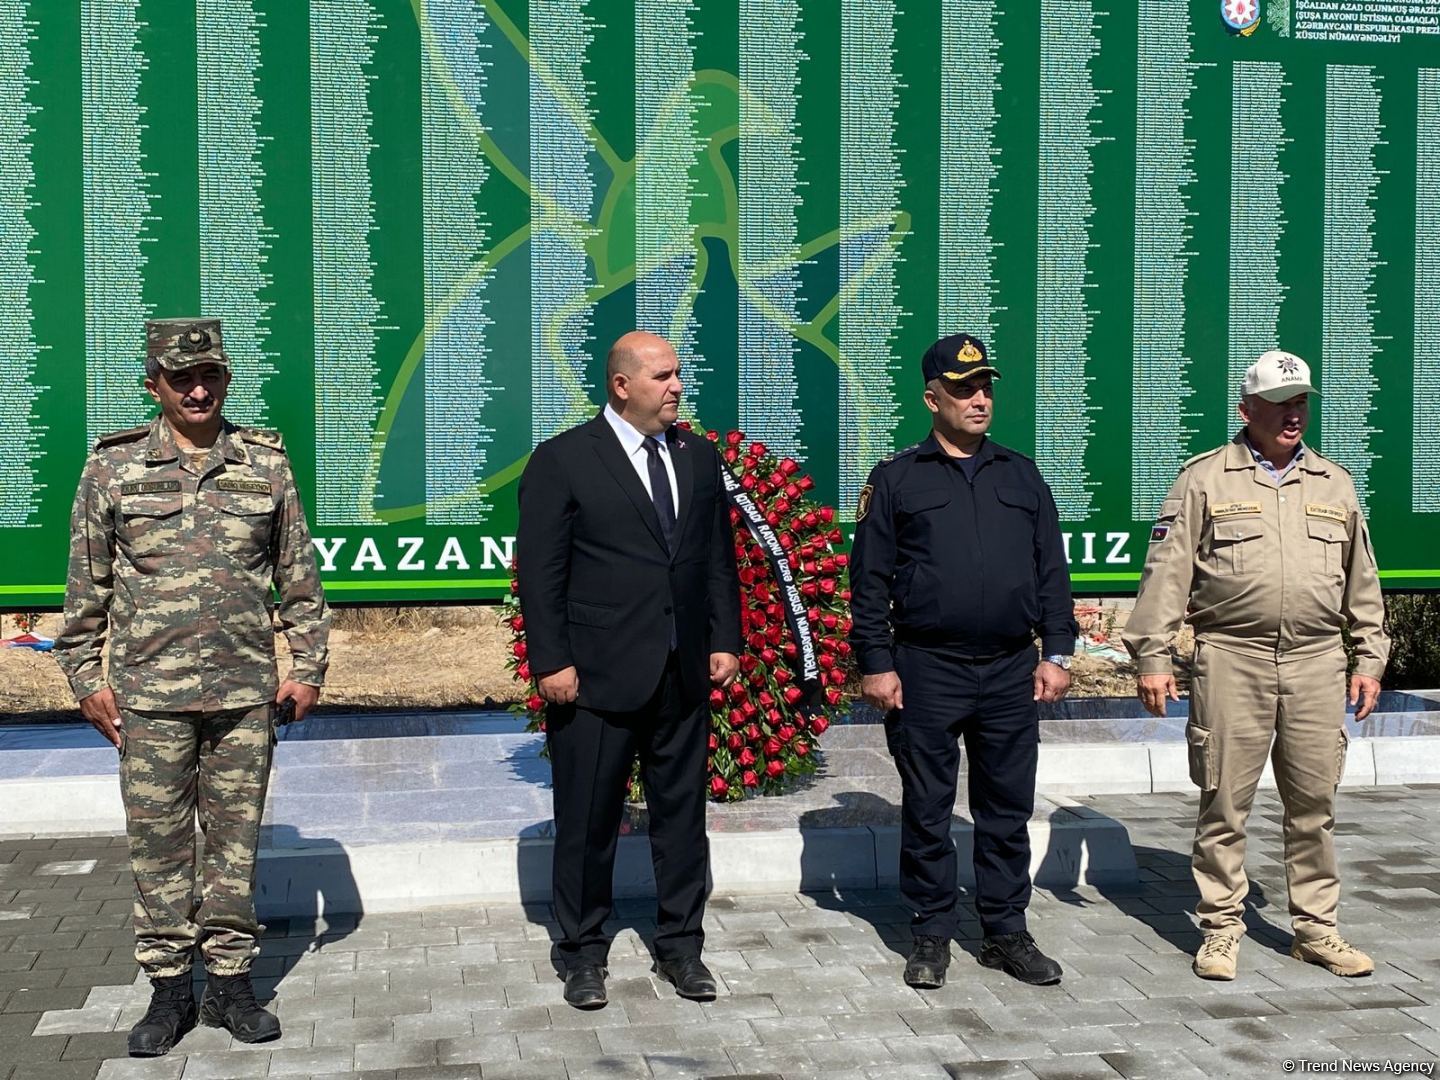 Azerbaijani people honor memory of martyrs in Aghdam (PHOTO)